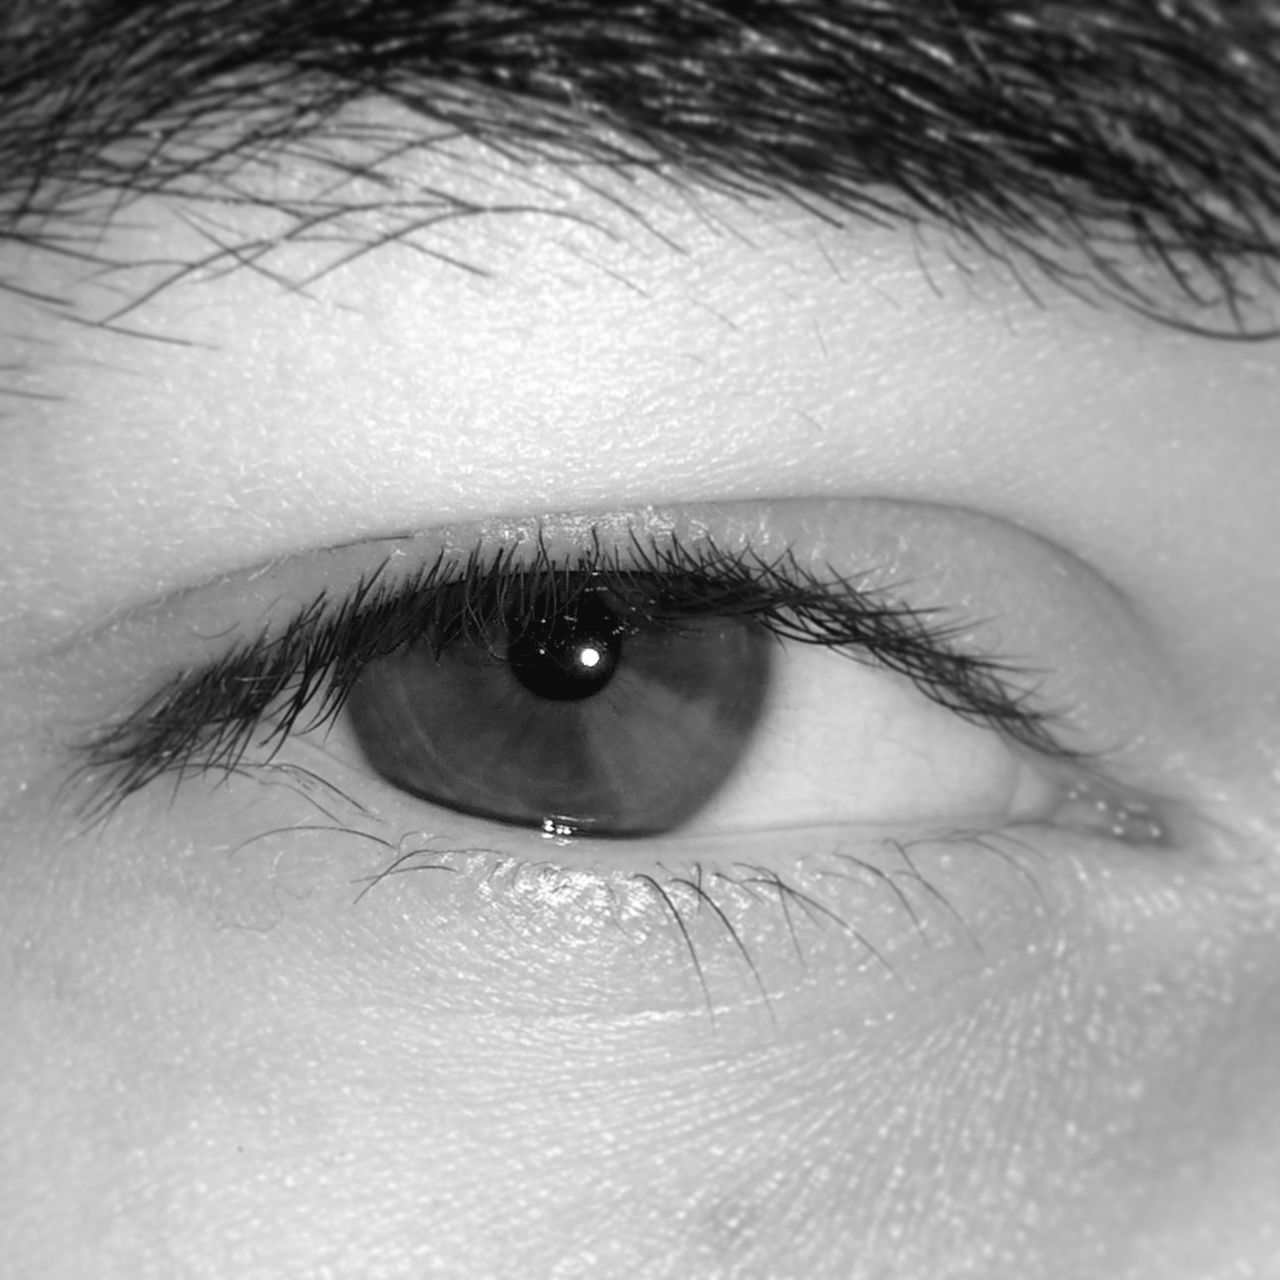 human eye, eyelash, close-up, eyesight, human face, looking at camera, human skin, part of, sensory perception, portrait, extreme close-up, iris - eye, lifestyles, eyeball, eyebrow, person, headshot